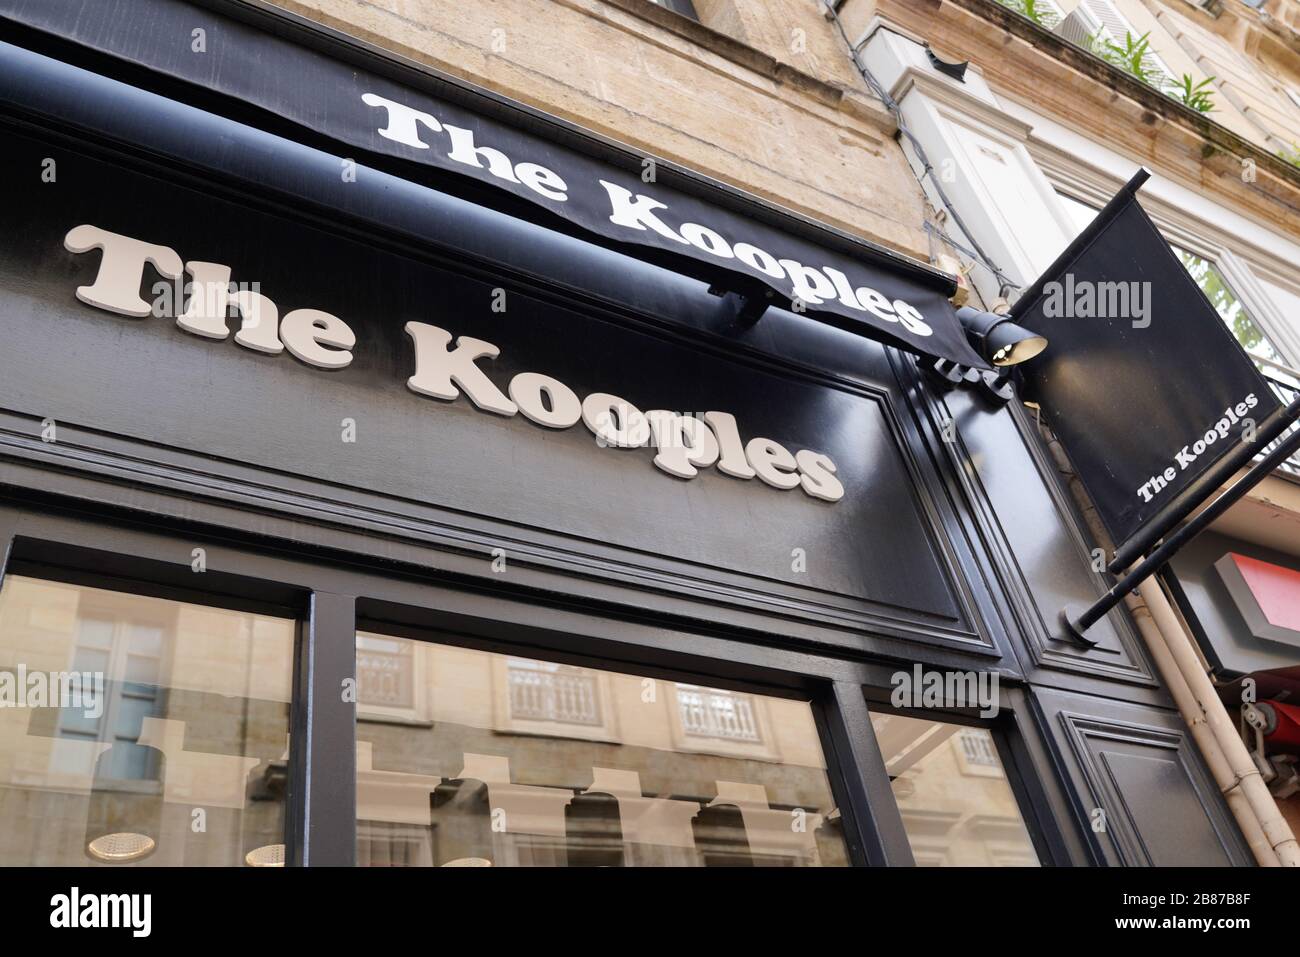 Bordeaux , Aquitaine / France - 10 06 2019 : the koople sign shop windows store logo Stock Photo